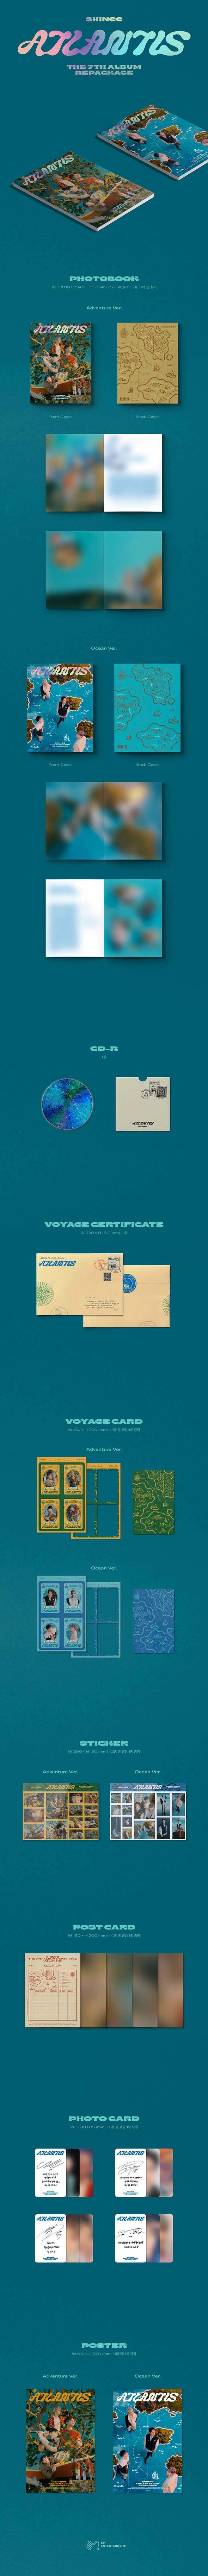 SHINEE - 7th Full Album Repackaged 'Atlantis'